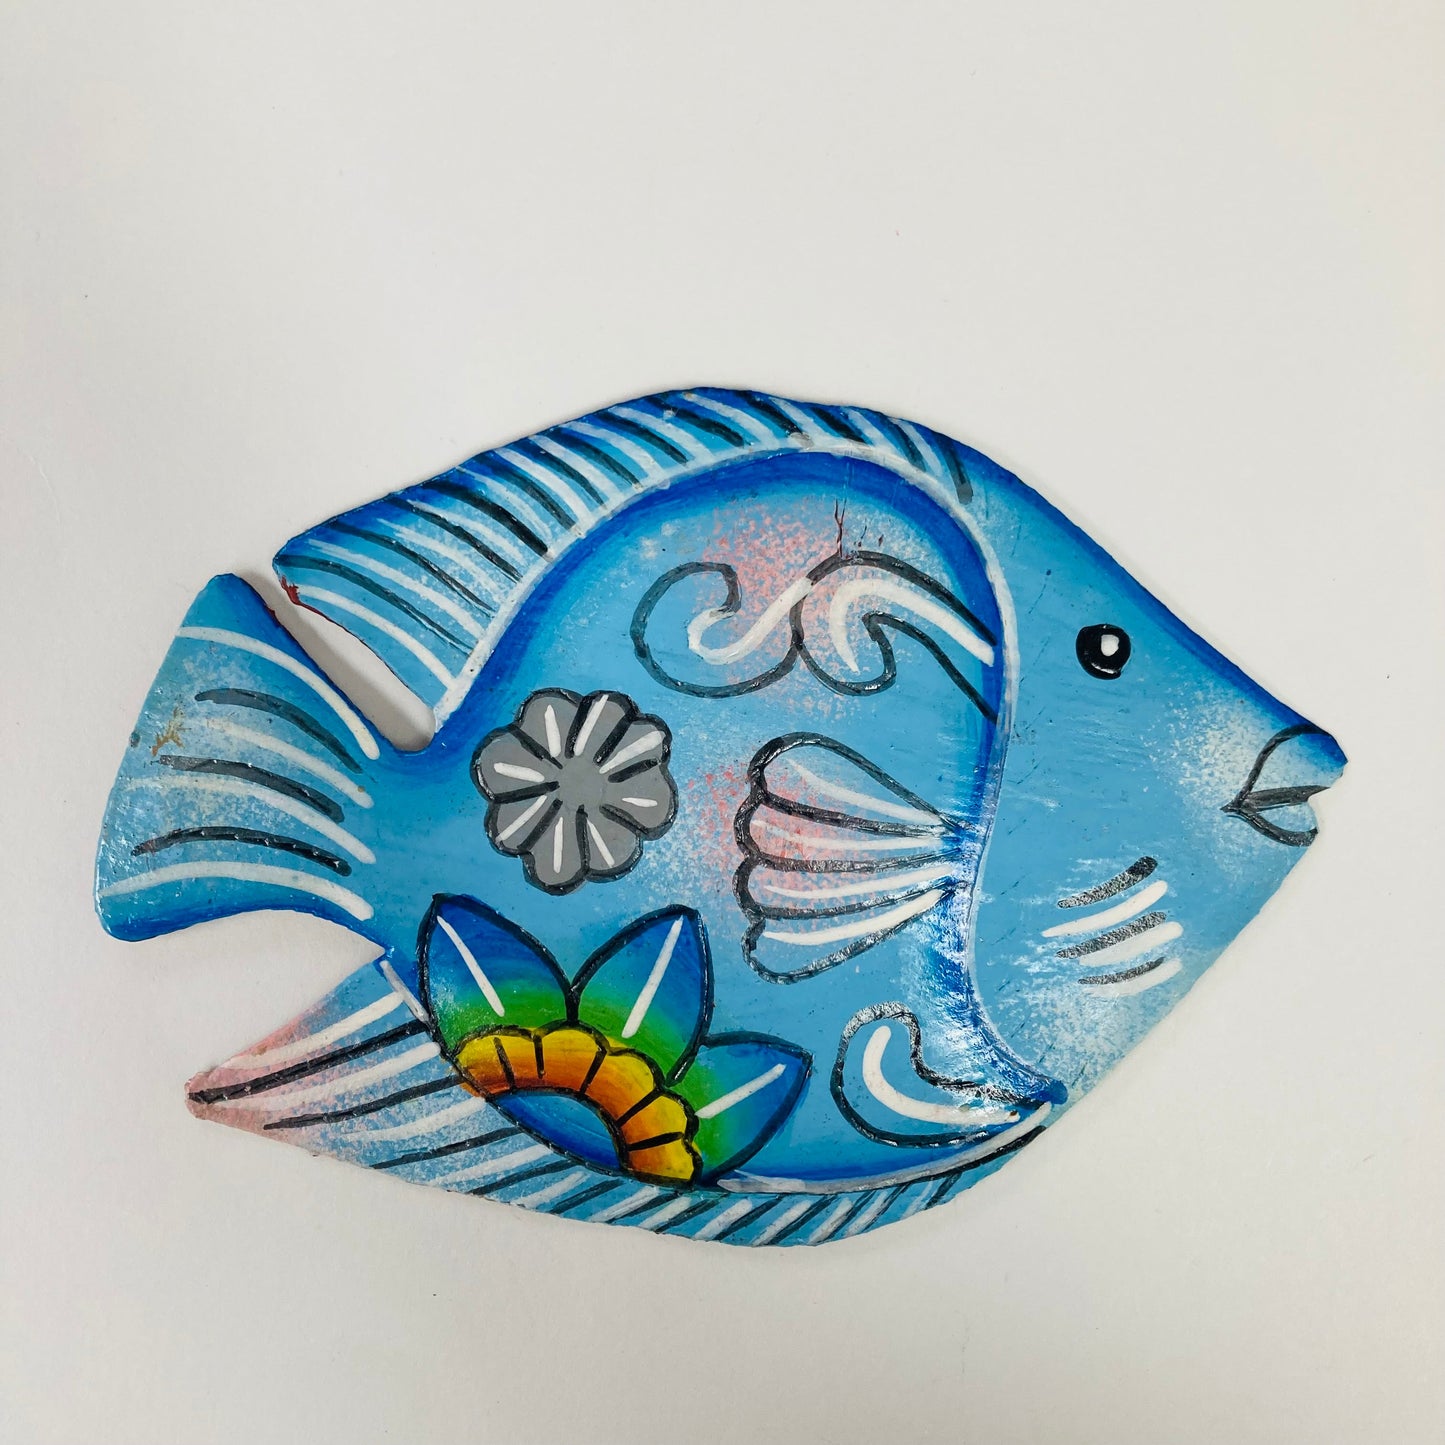 Metal Fish Ornament/ Wall Decor